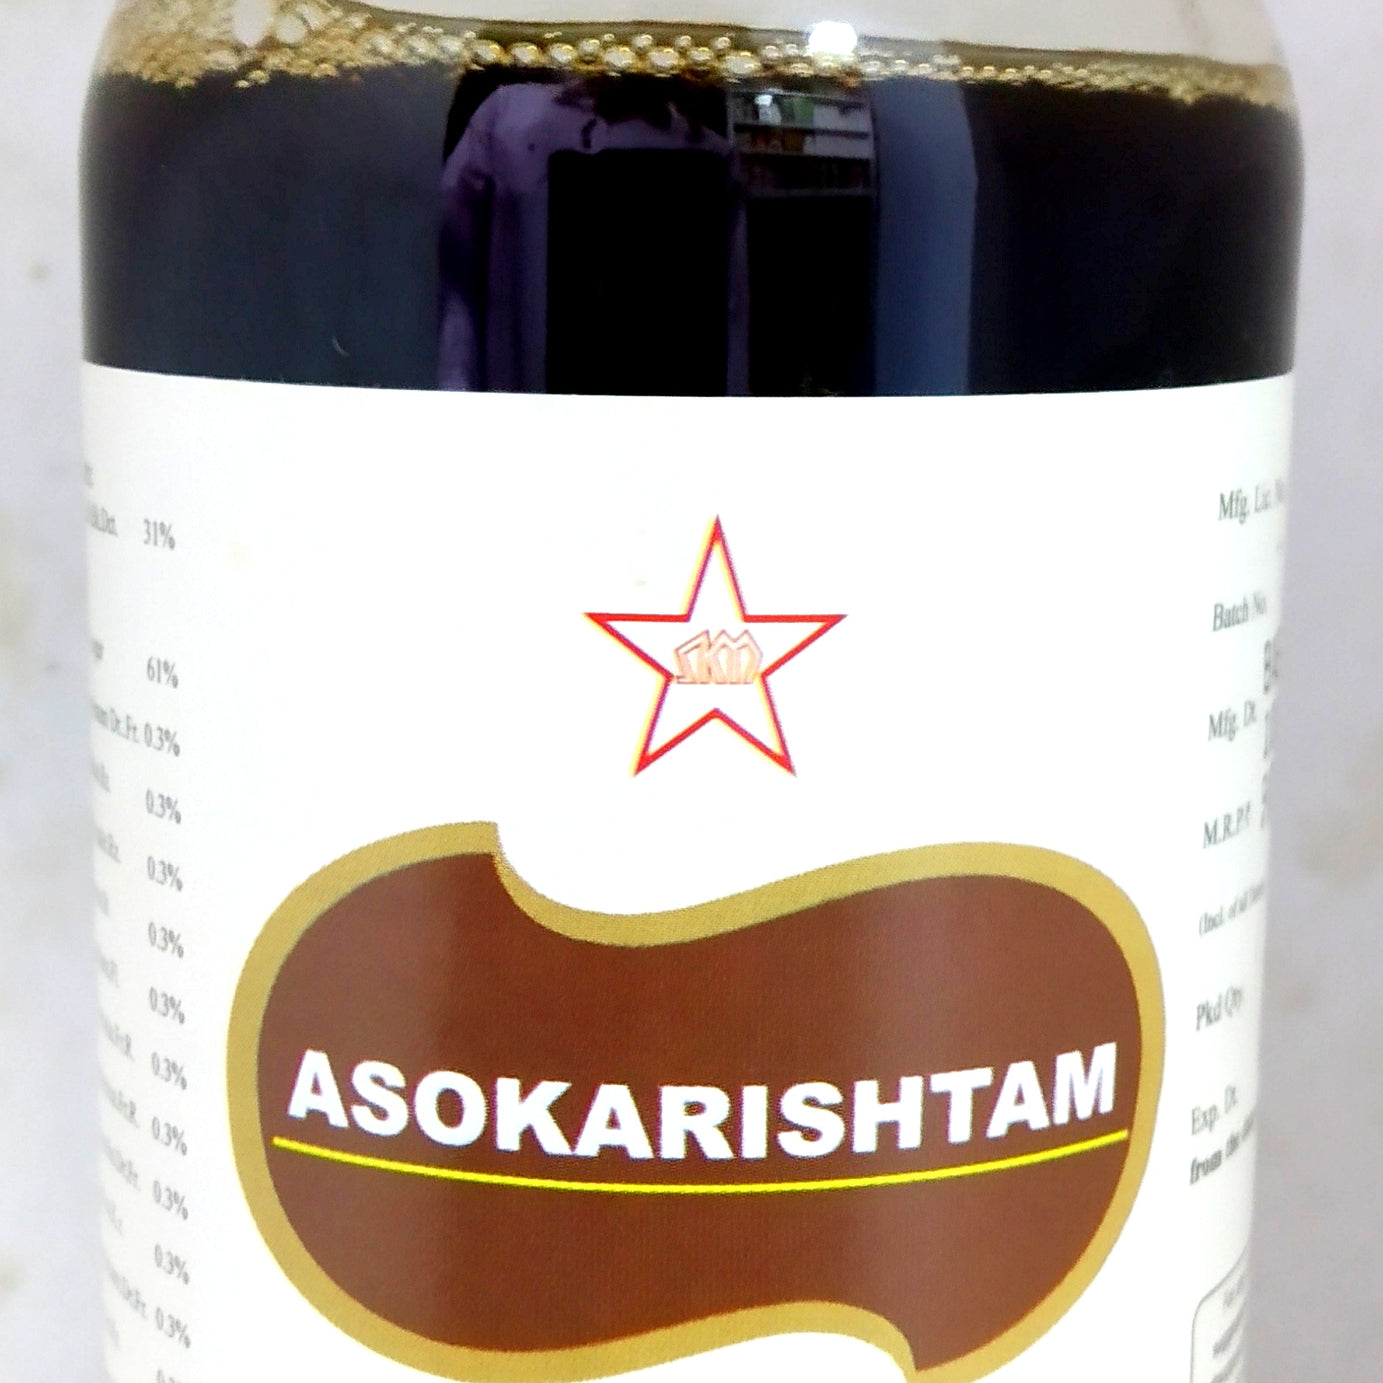 Shop SKM Ashokarishtam 450ml at price 99.00 from SKM Online - Ayush Care